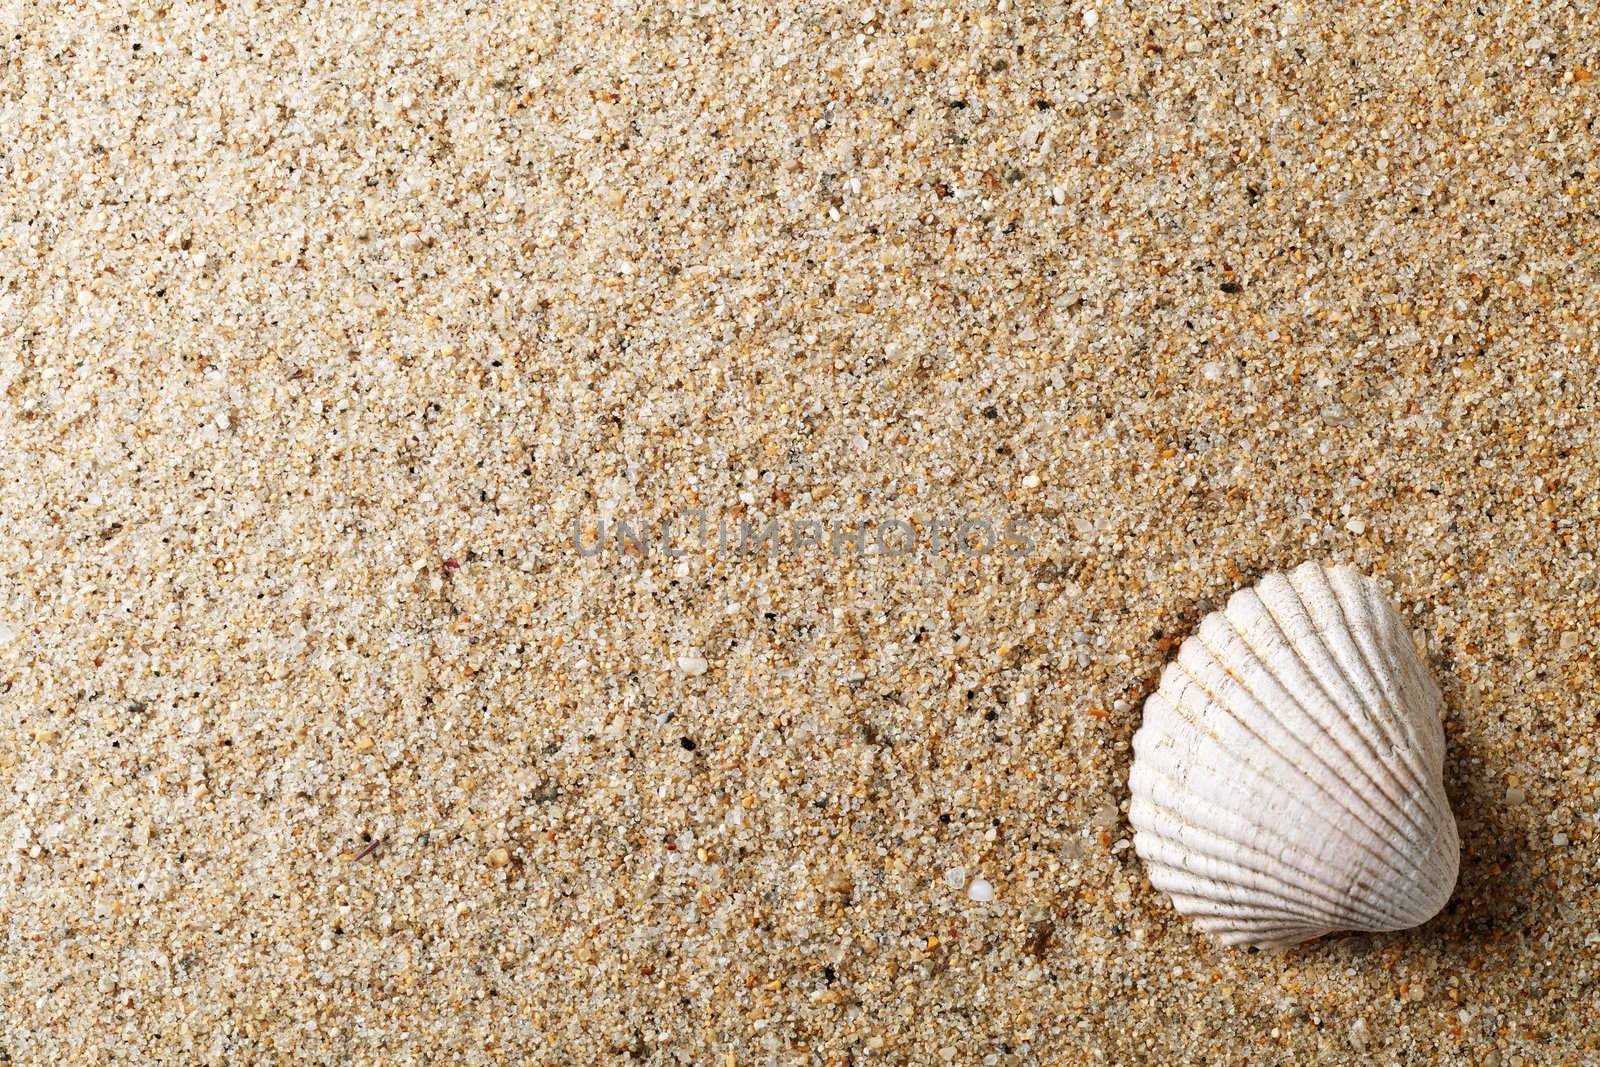 Shell On Sand by bozena_fulawka